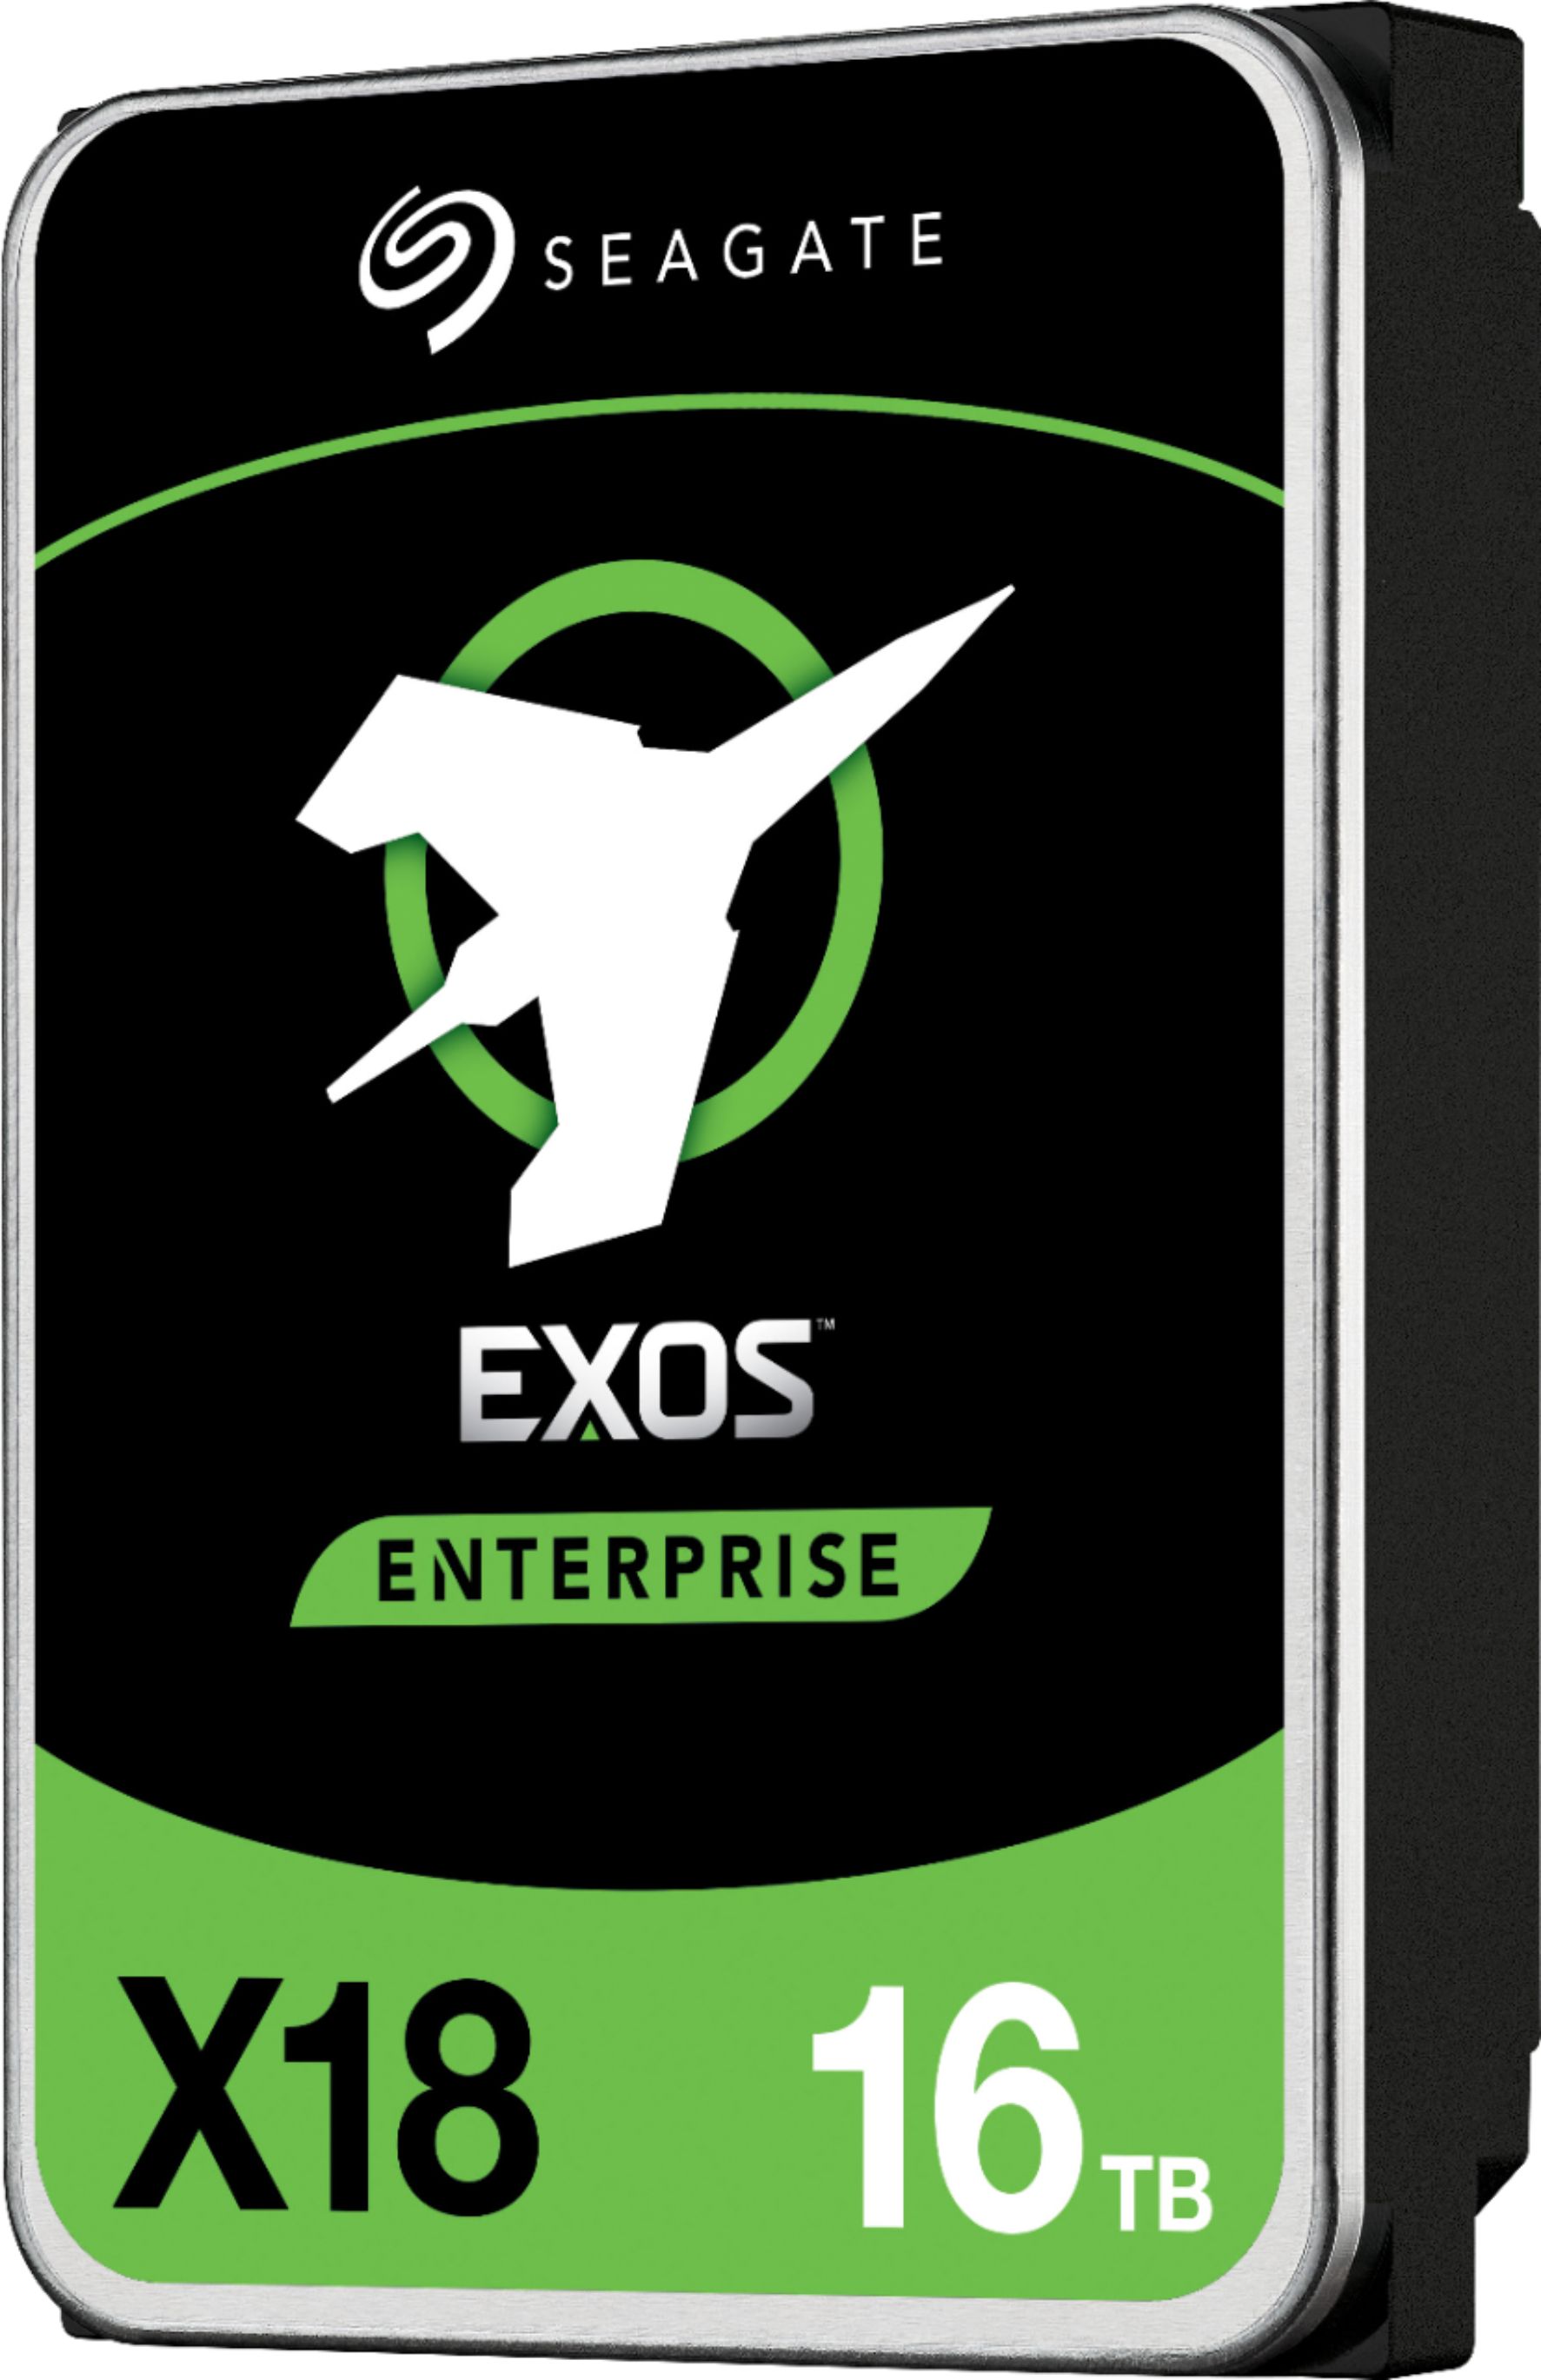 Seagate Exos: Best-in-Class Enterprise Hard Drives 